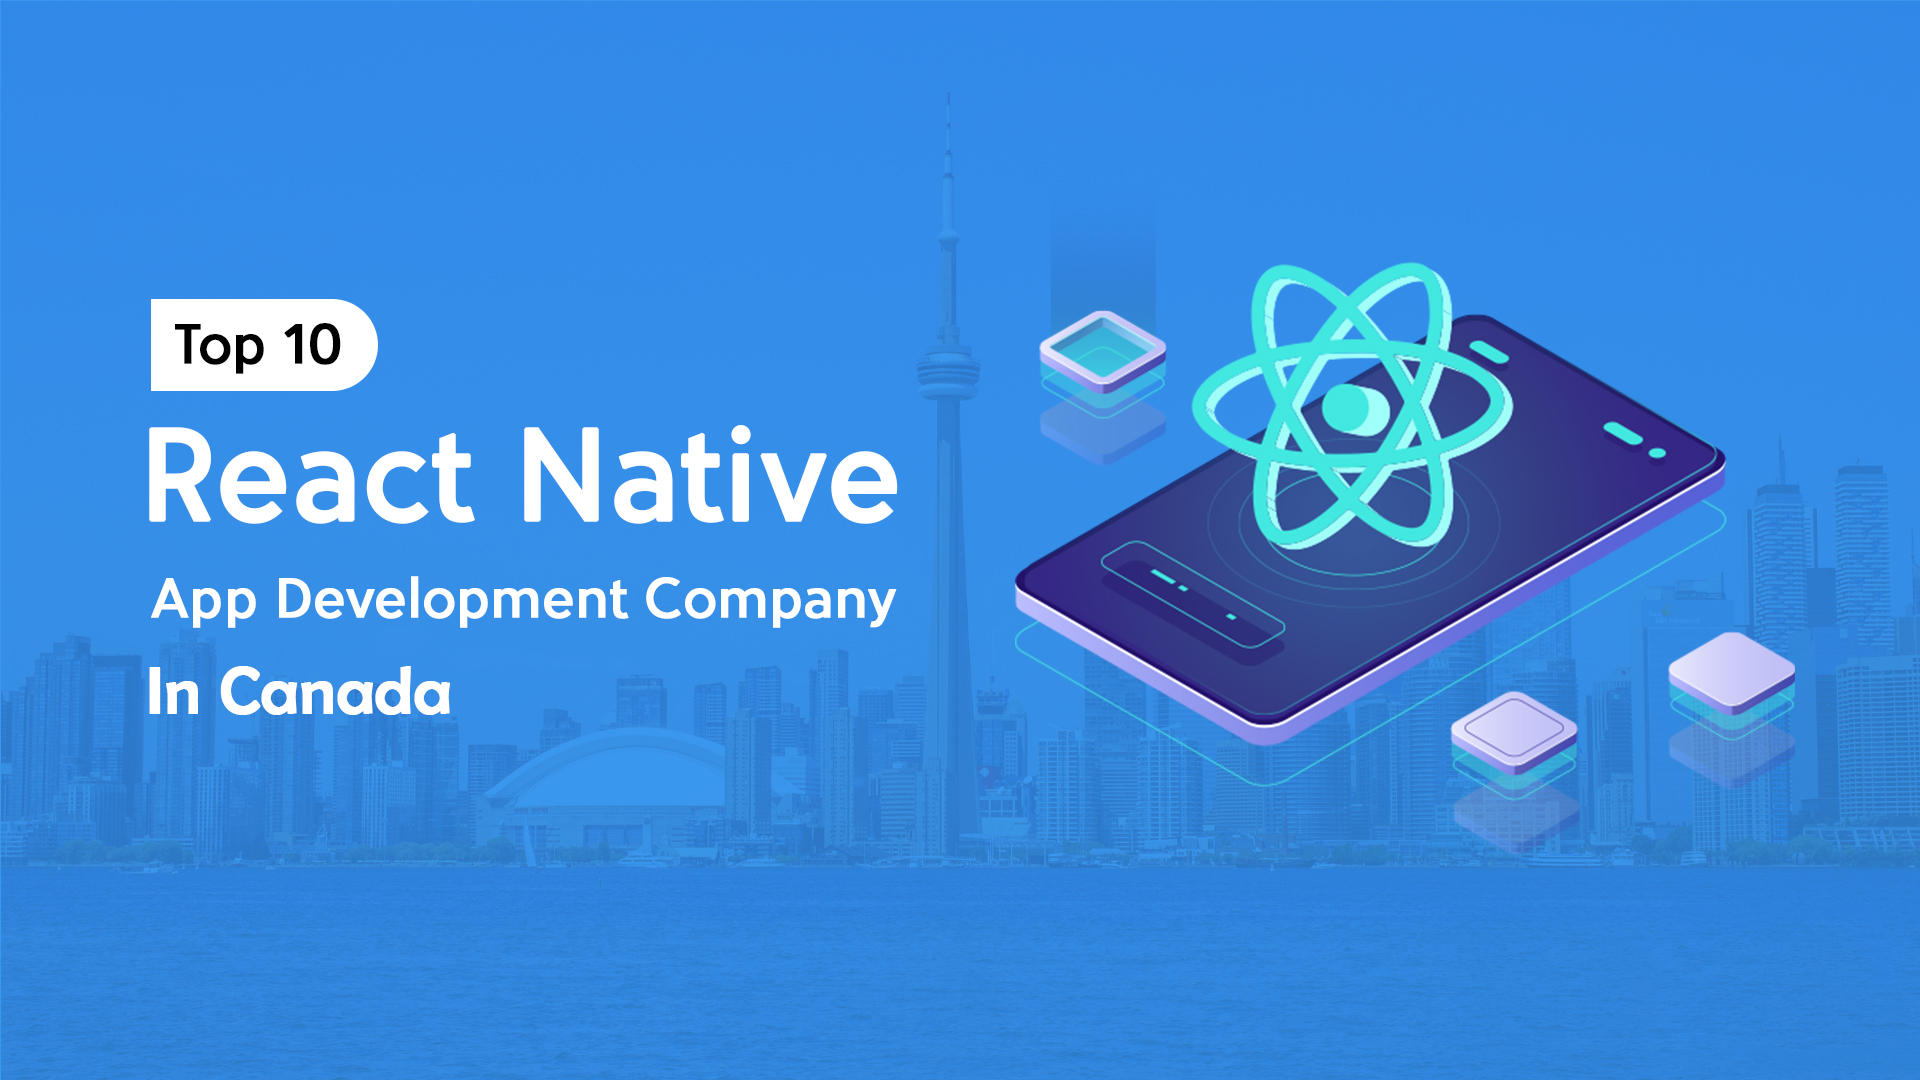 Top 10 React Native App Development Company in Canada